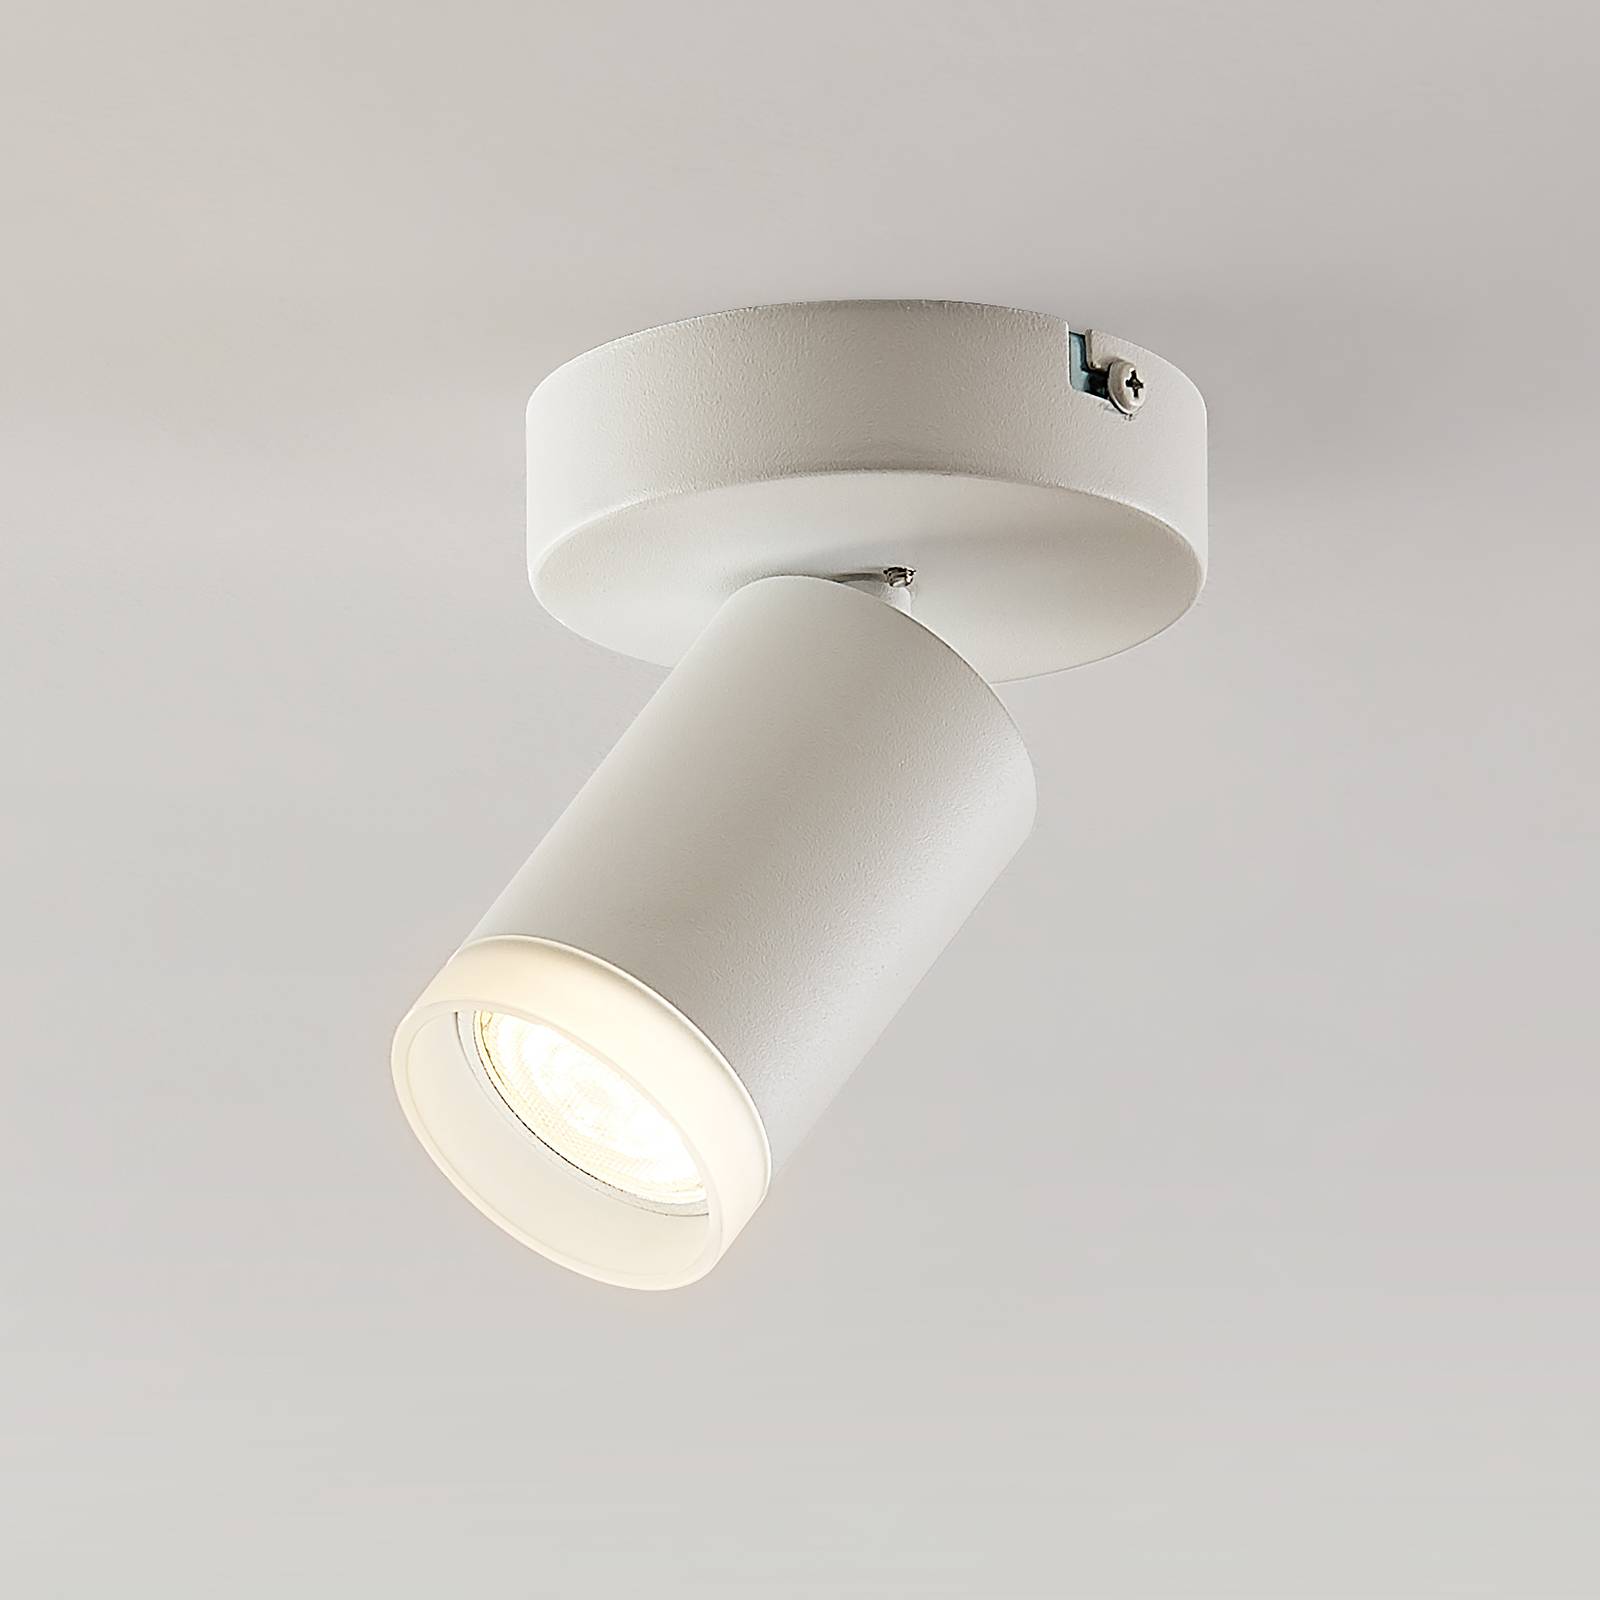 Arcchio Efilius spot plafond, rond, blanc, 1 lampe